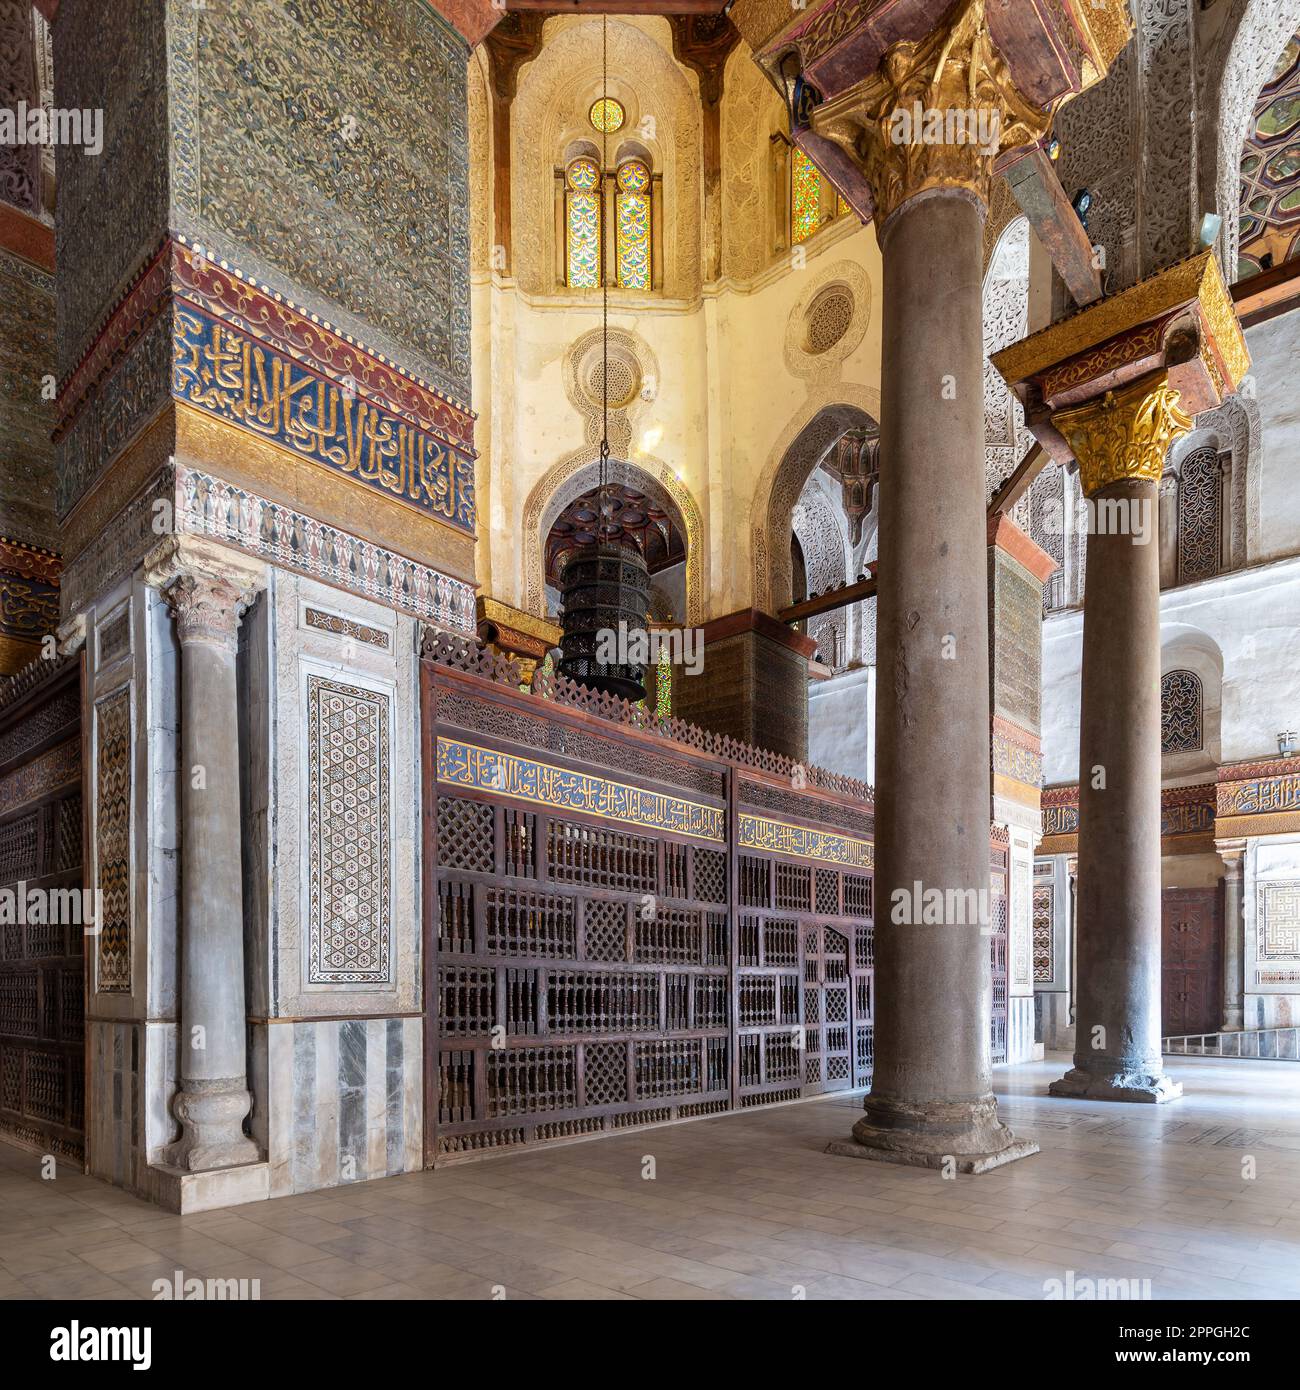 Interior view of Mausoleum of Sultan Qalawun, Sultan Qalawun Complex, Moez Street, Cairo, Egypt Stock Photo